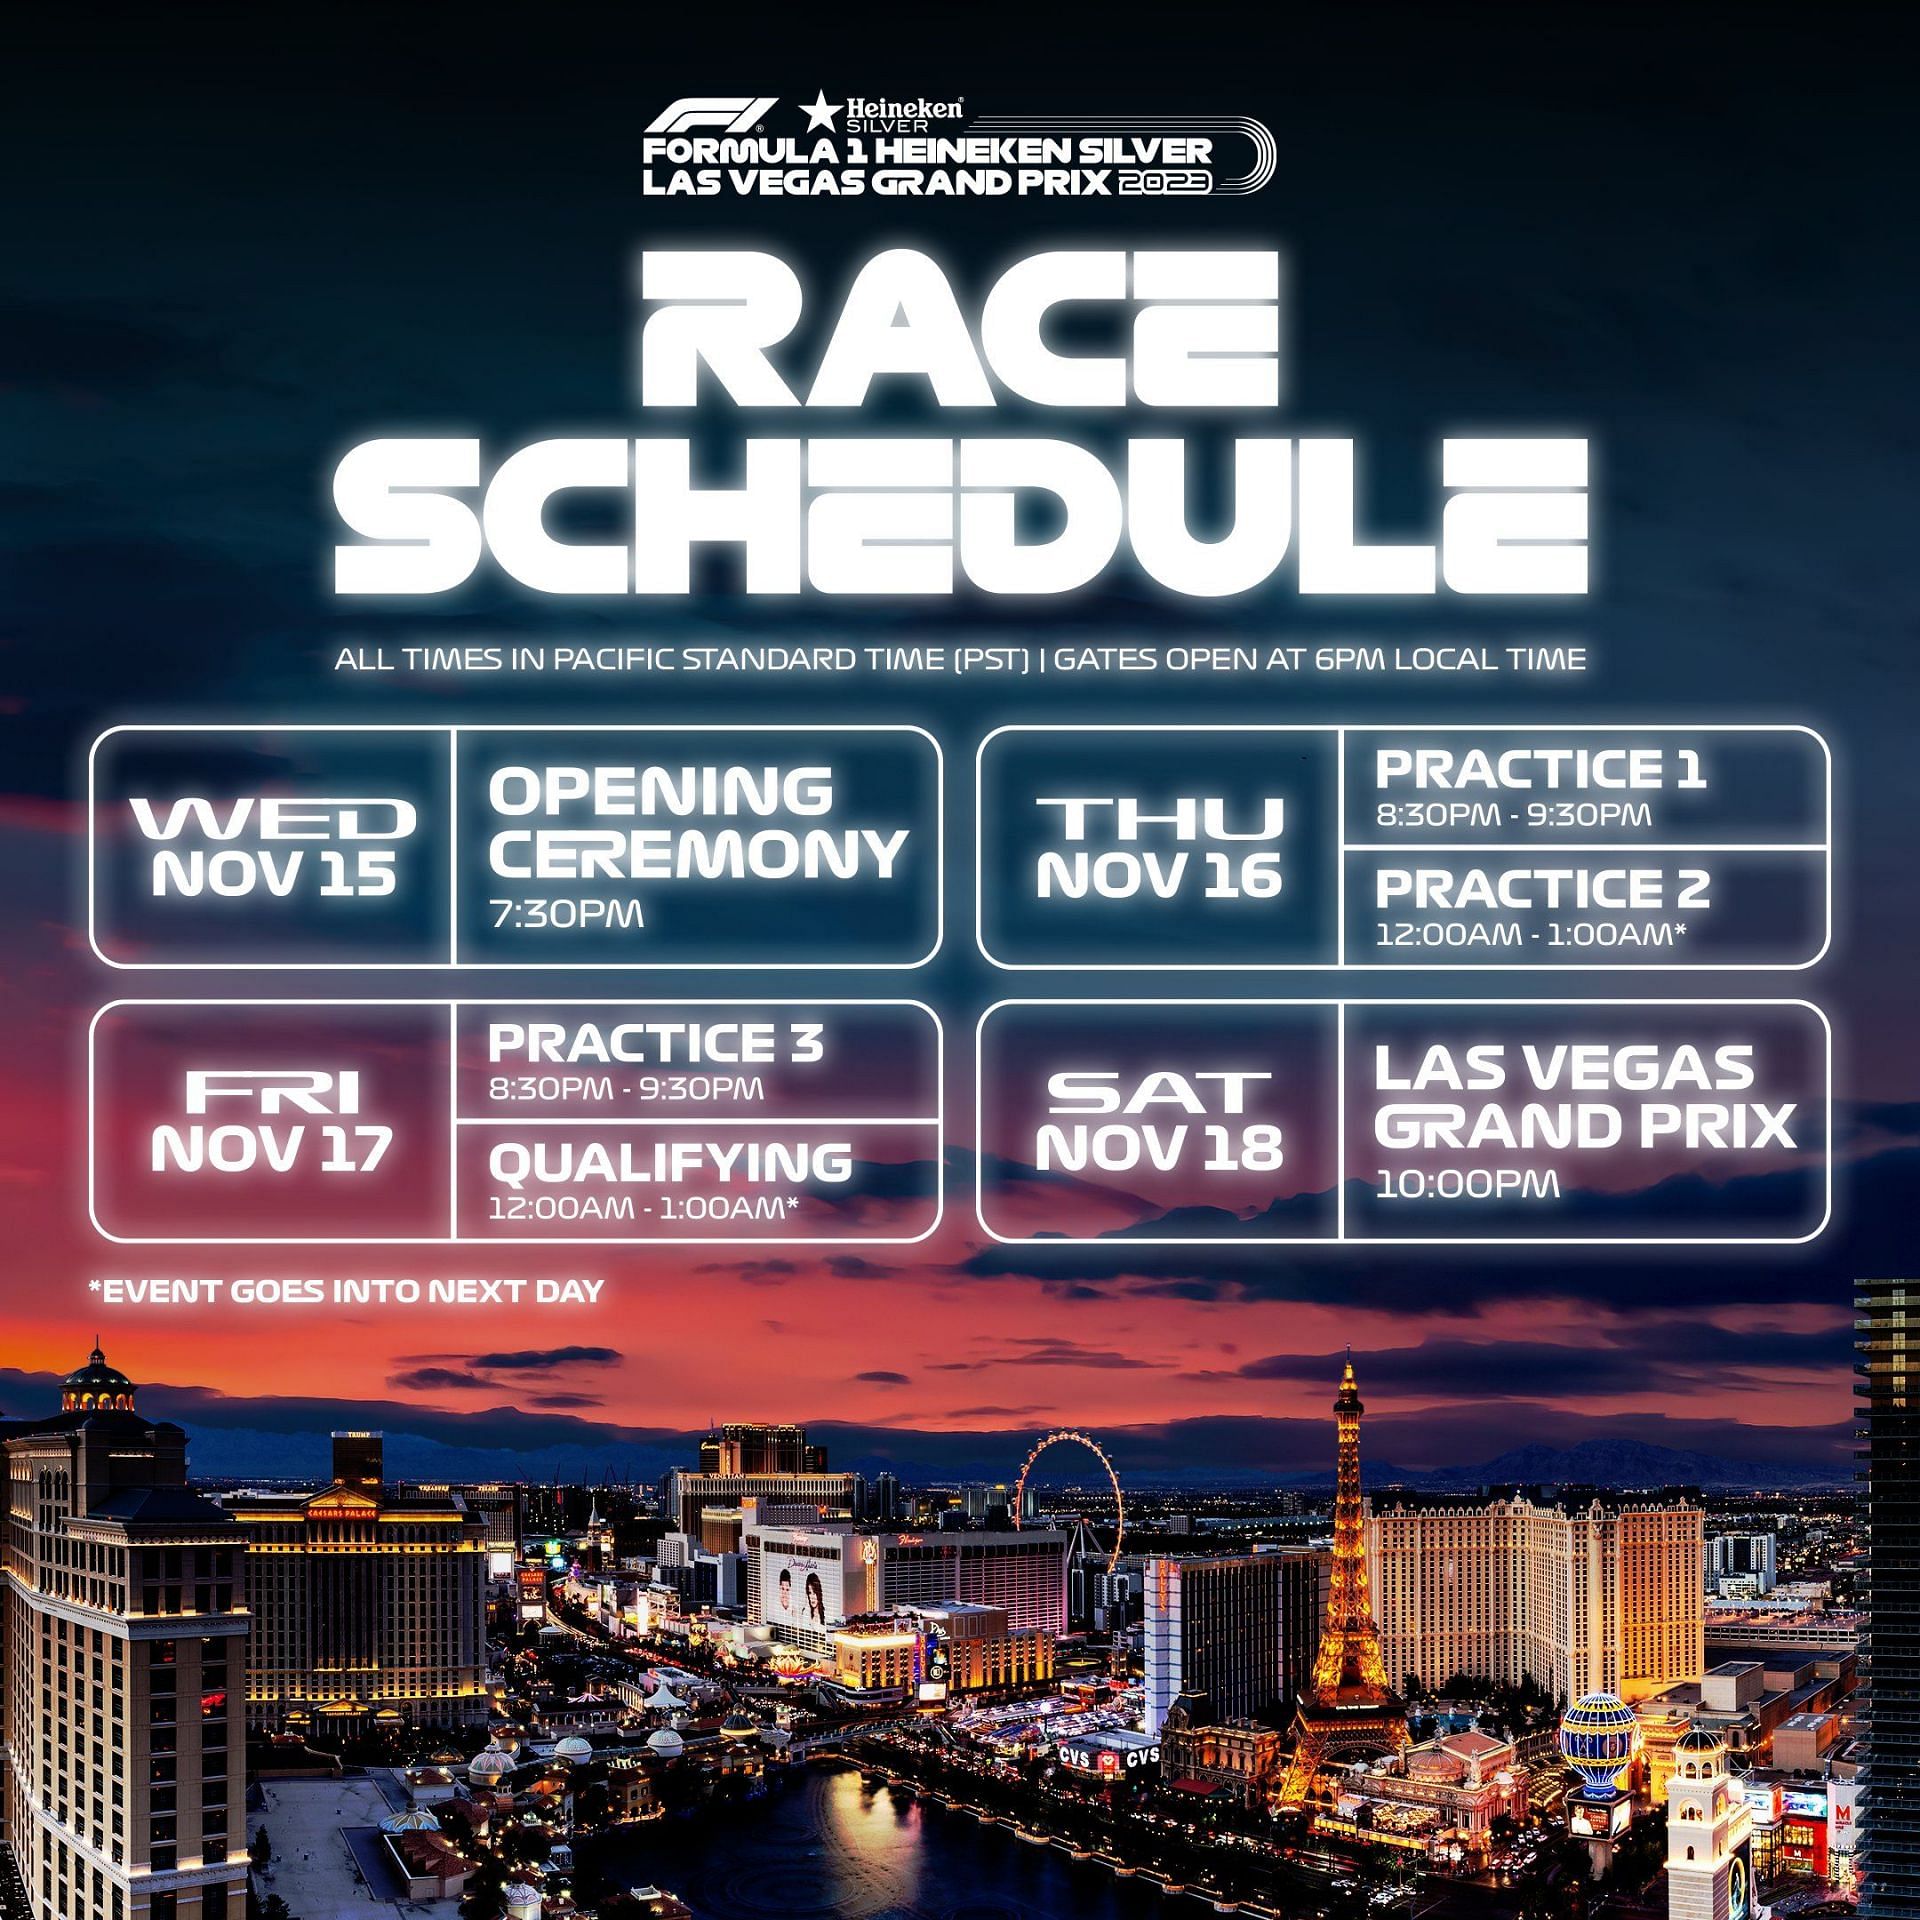 Las Vegas Grand Prix Schedule (via Las Vegas Grand Prix Twitter)